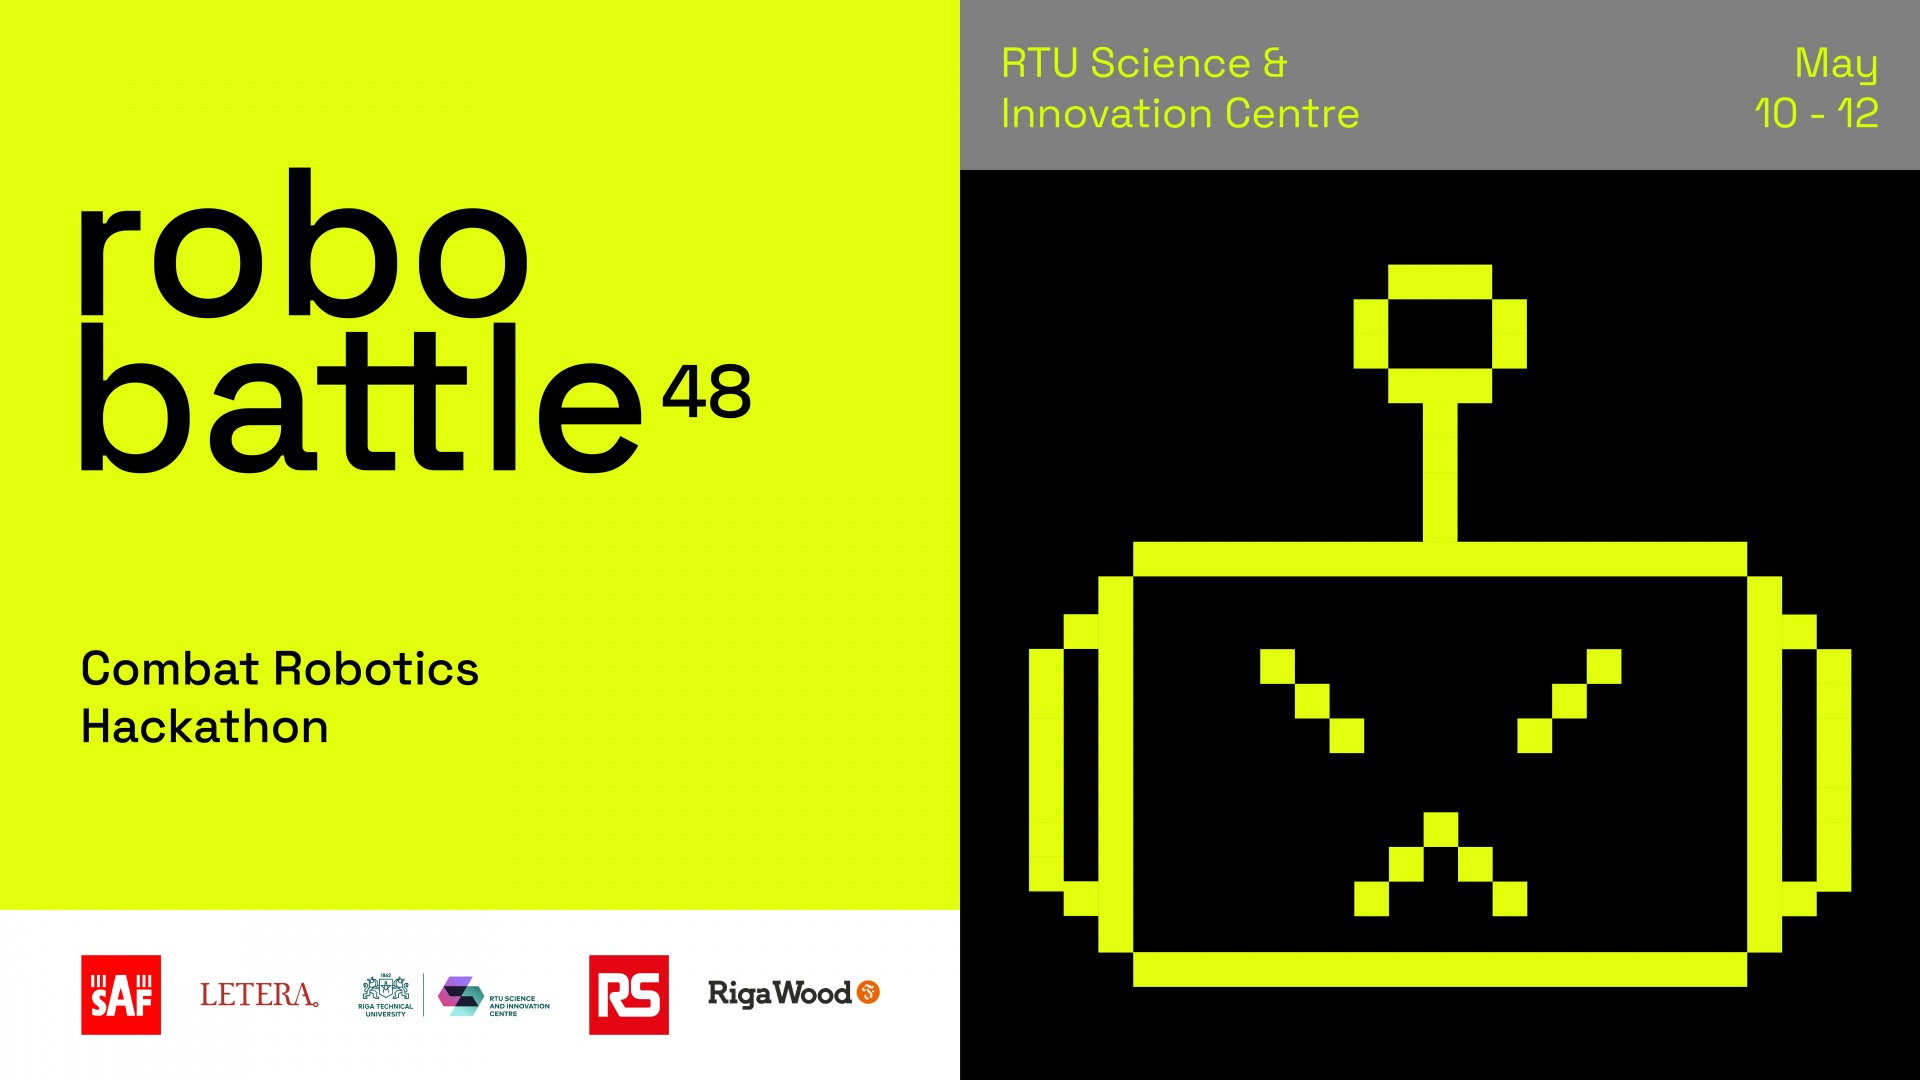 «RoboBattle 48» Hackathon Participants Will Build Robots and Compete With Them